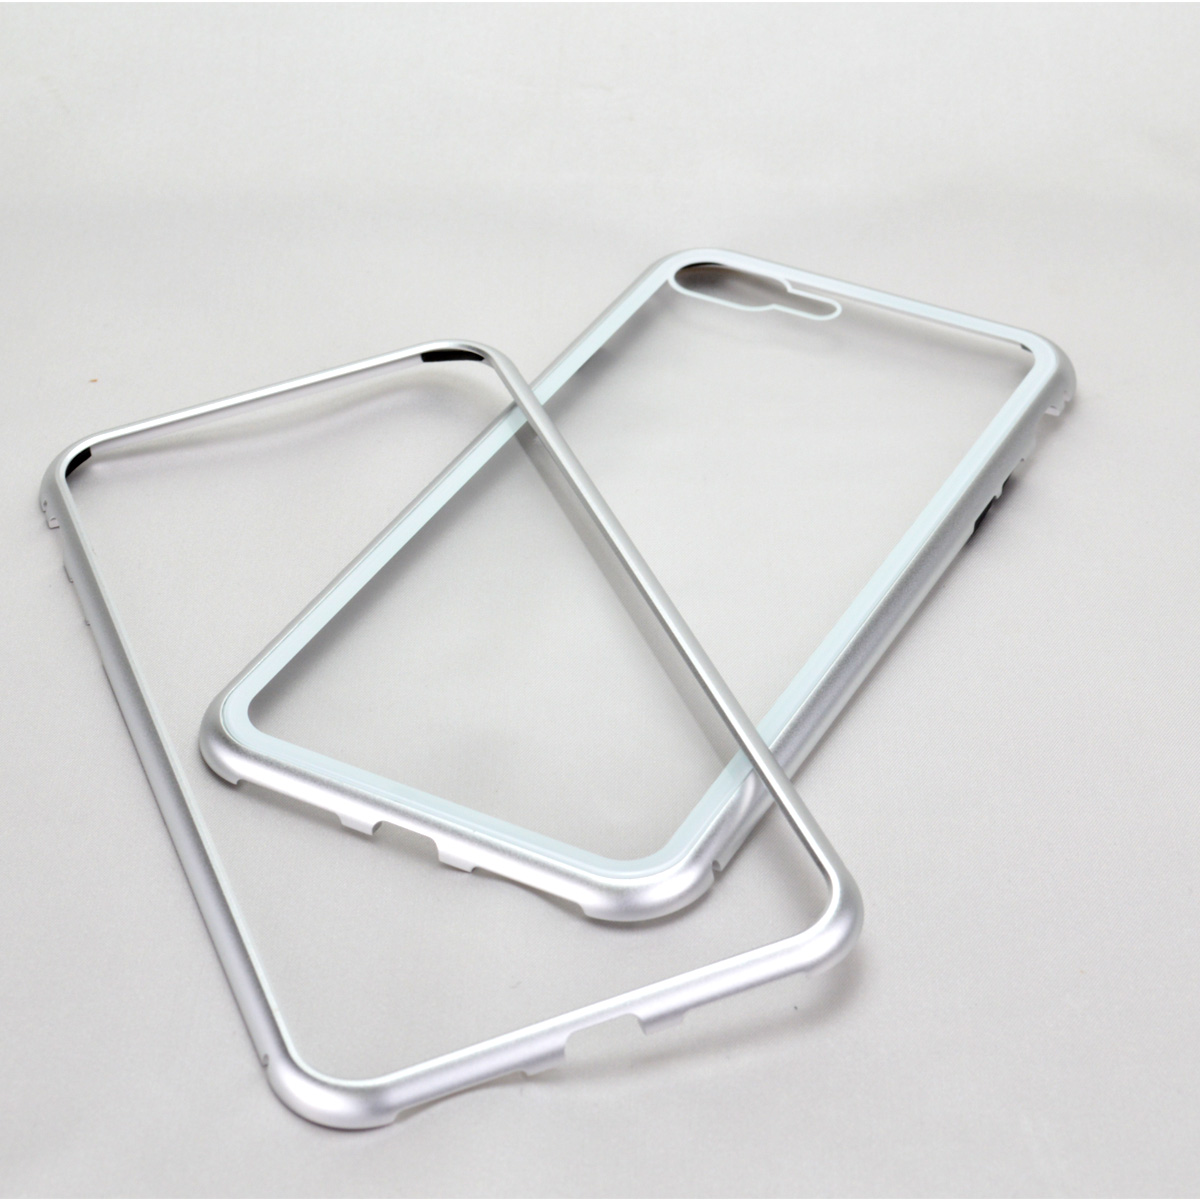 iPhoneXs ケース メタル iPhoneX iPhone8 iPhone7 Plus ケース 金属調ボディ 保護カバー マグネット式 全面保護 360°強化ガラス メール便なら送料無料画像